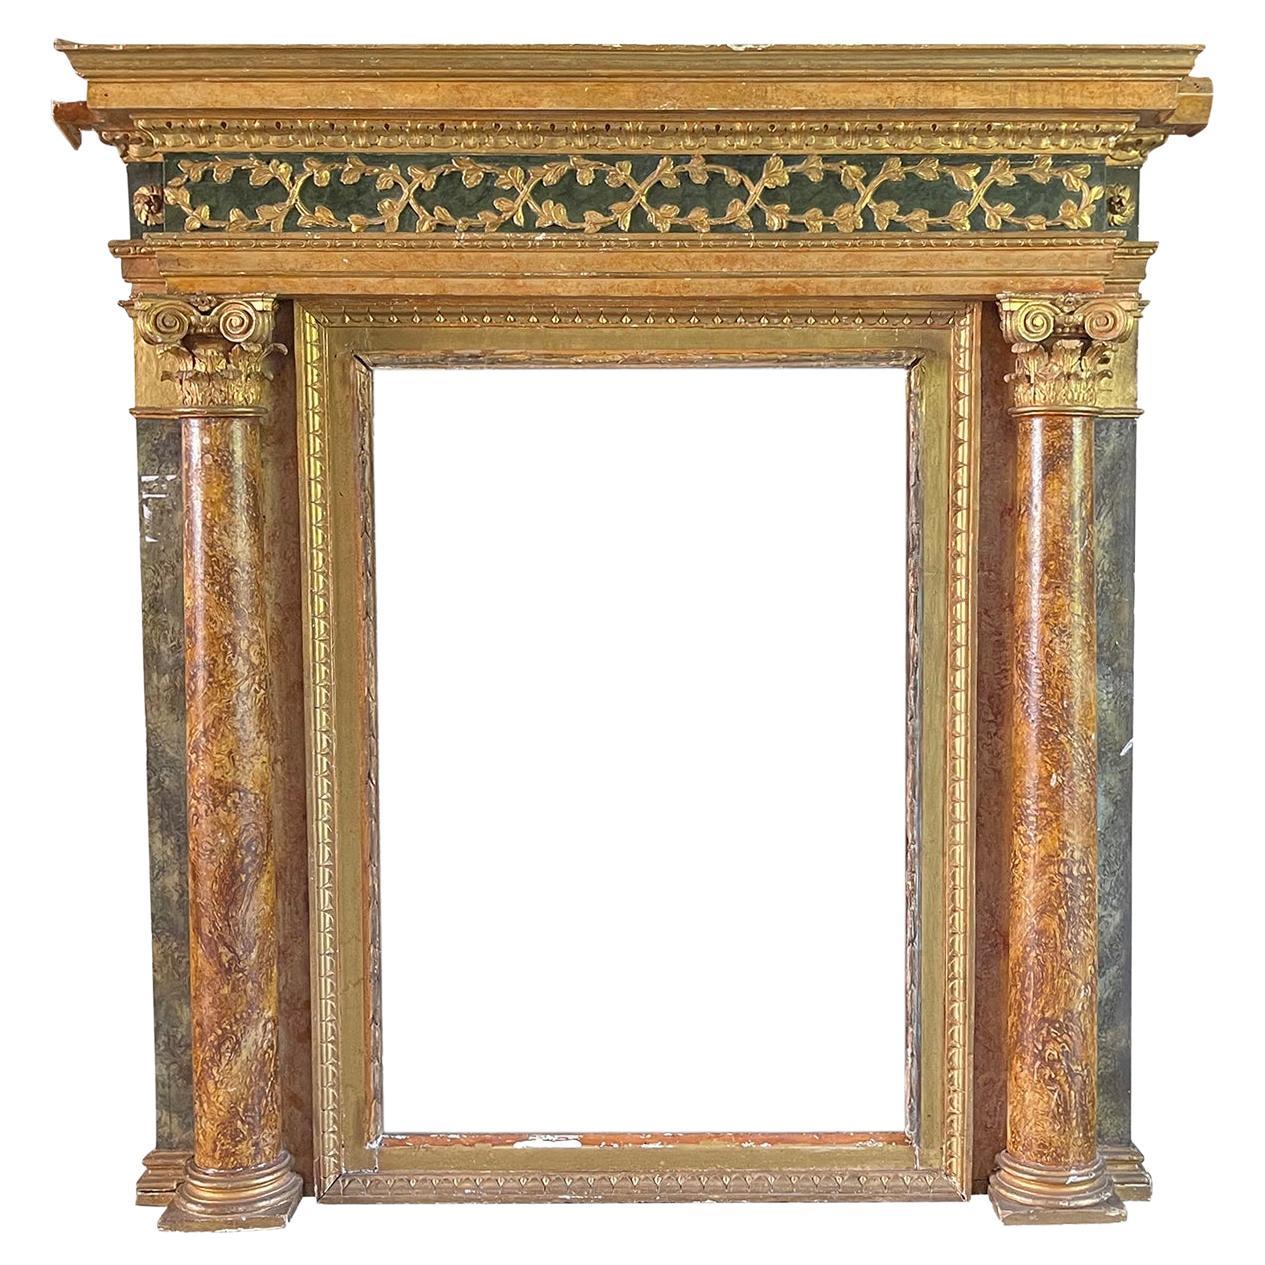 16th Century Italian Renaissance Fireplace Mantel Piece - Antique Surround